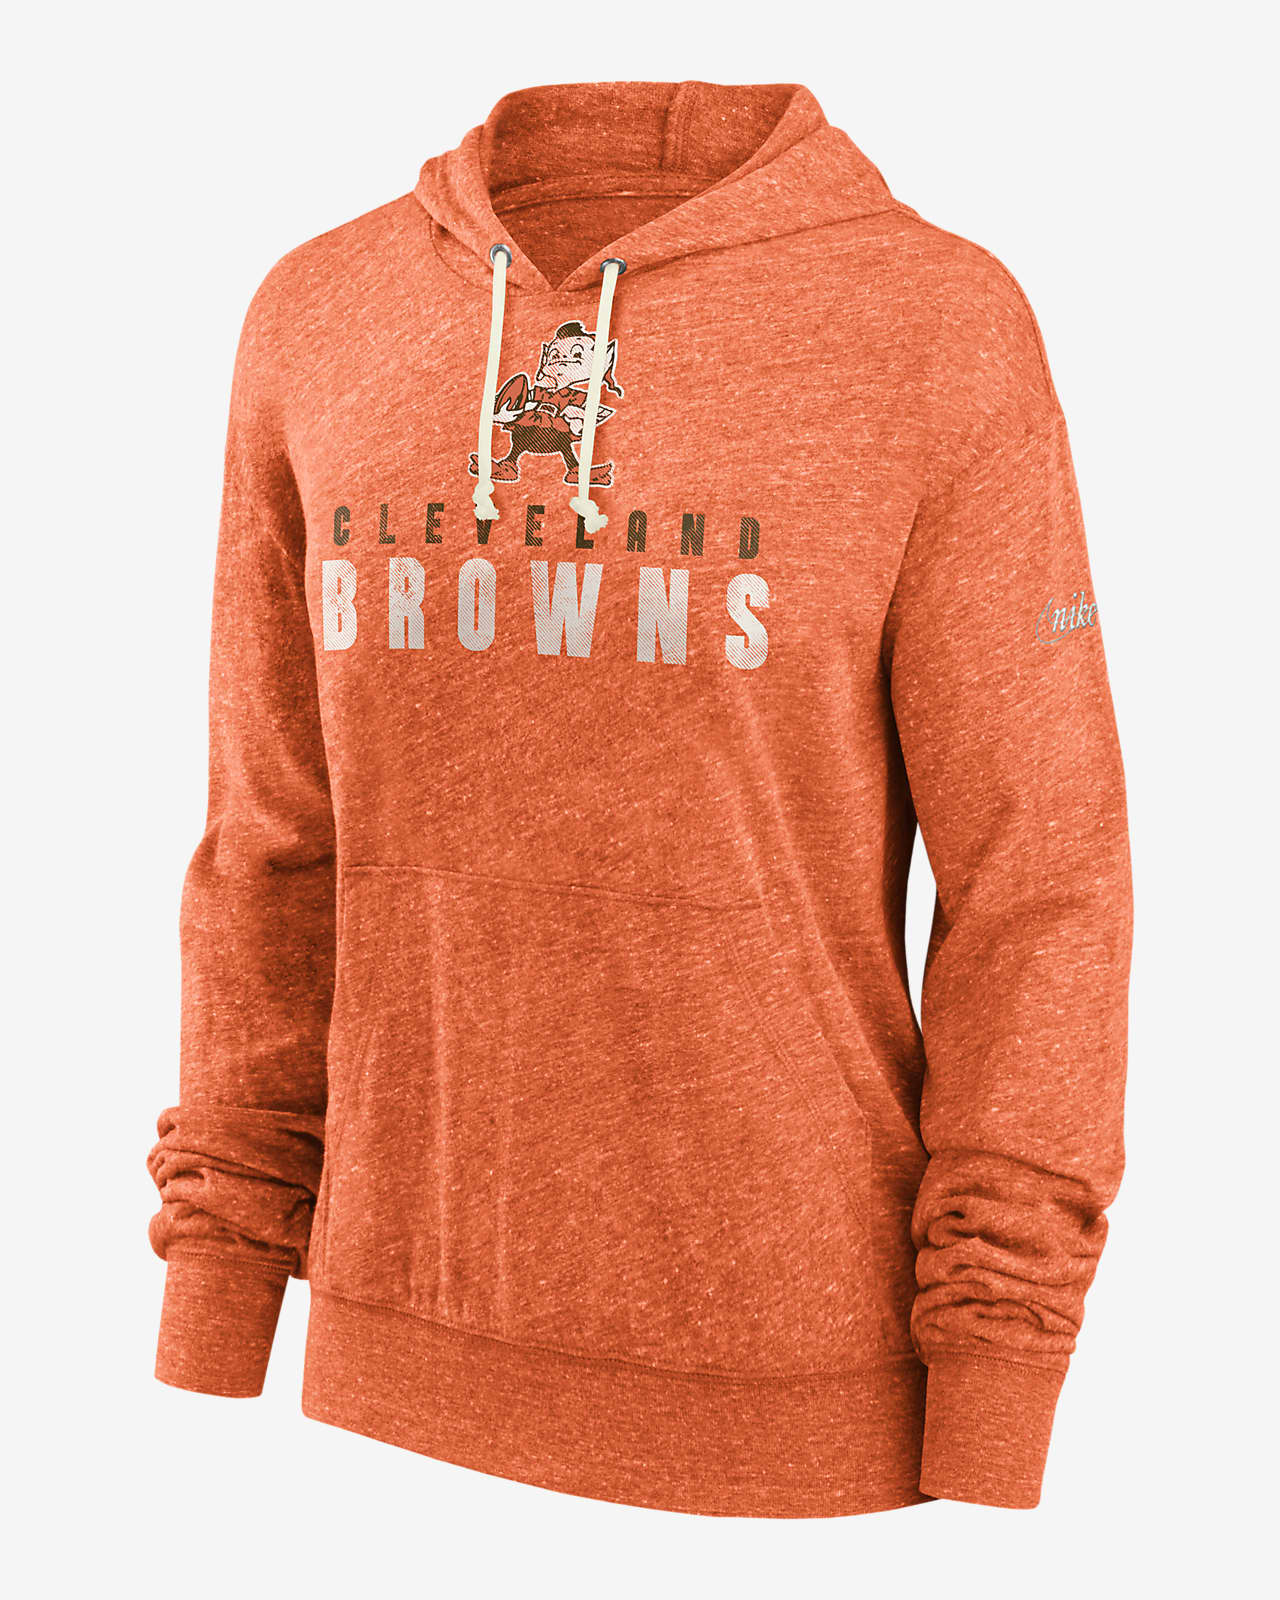 nfl browns sweatshirts